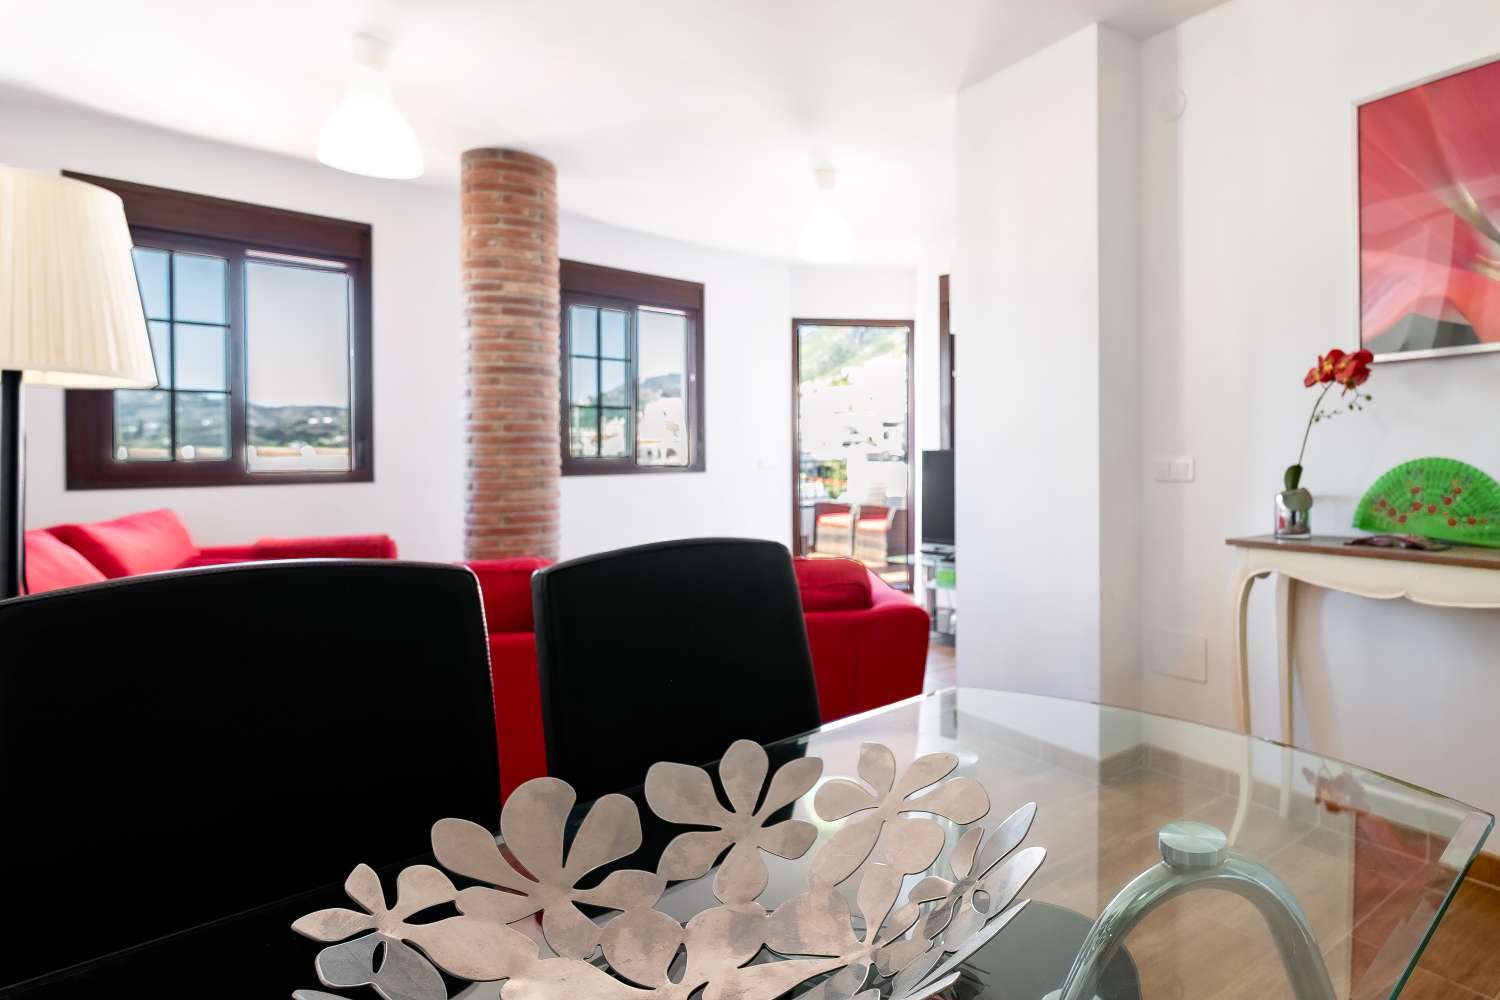 Beutiful apartament with spectacular views over Frigiliana